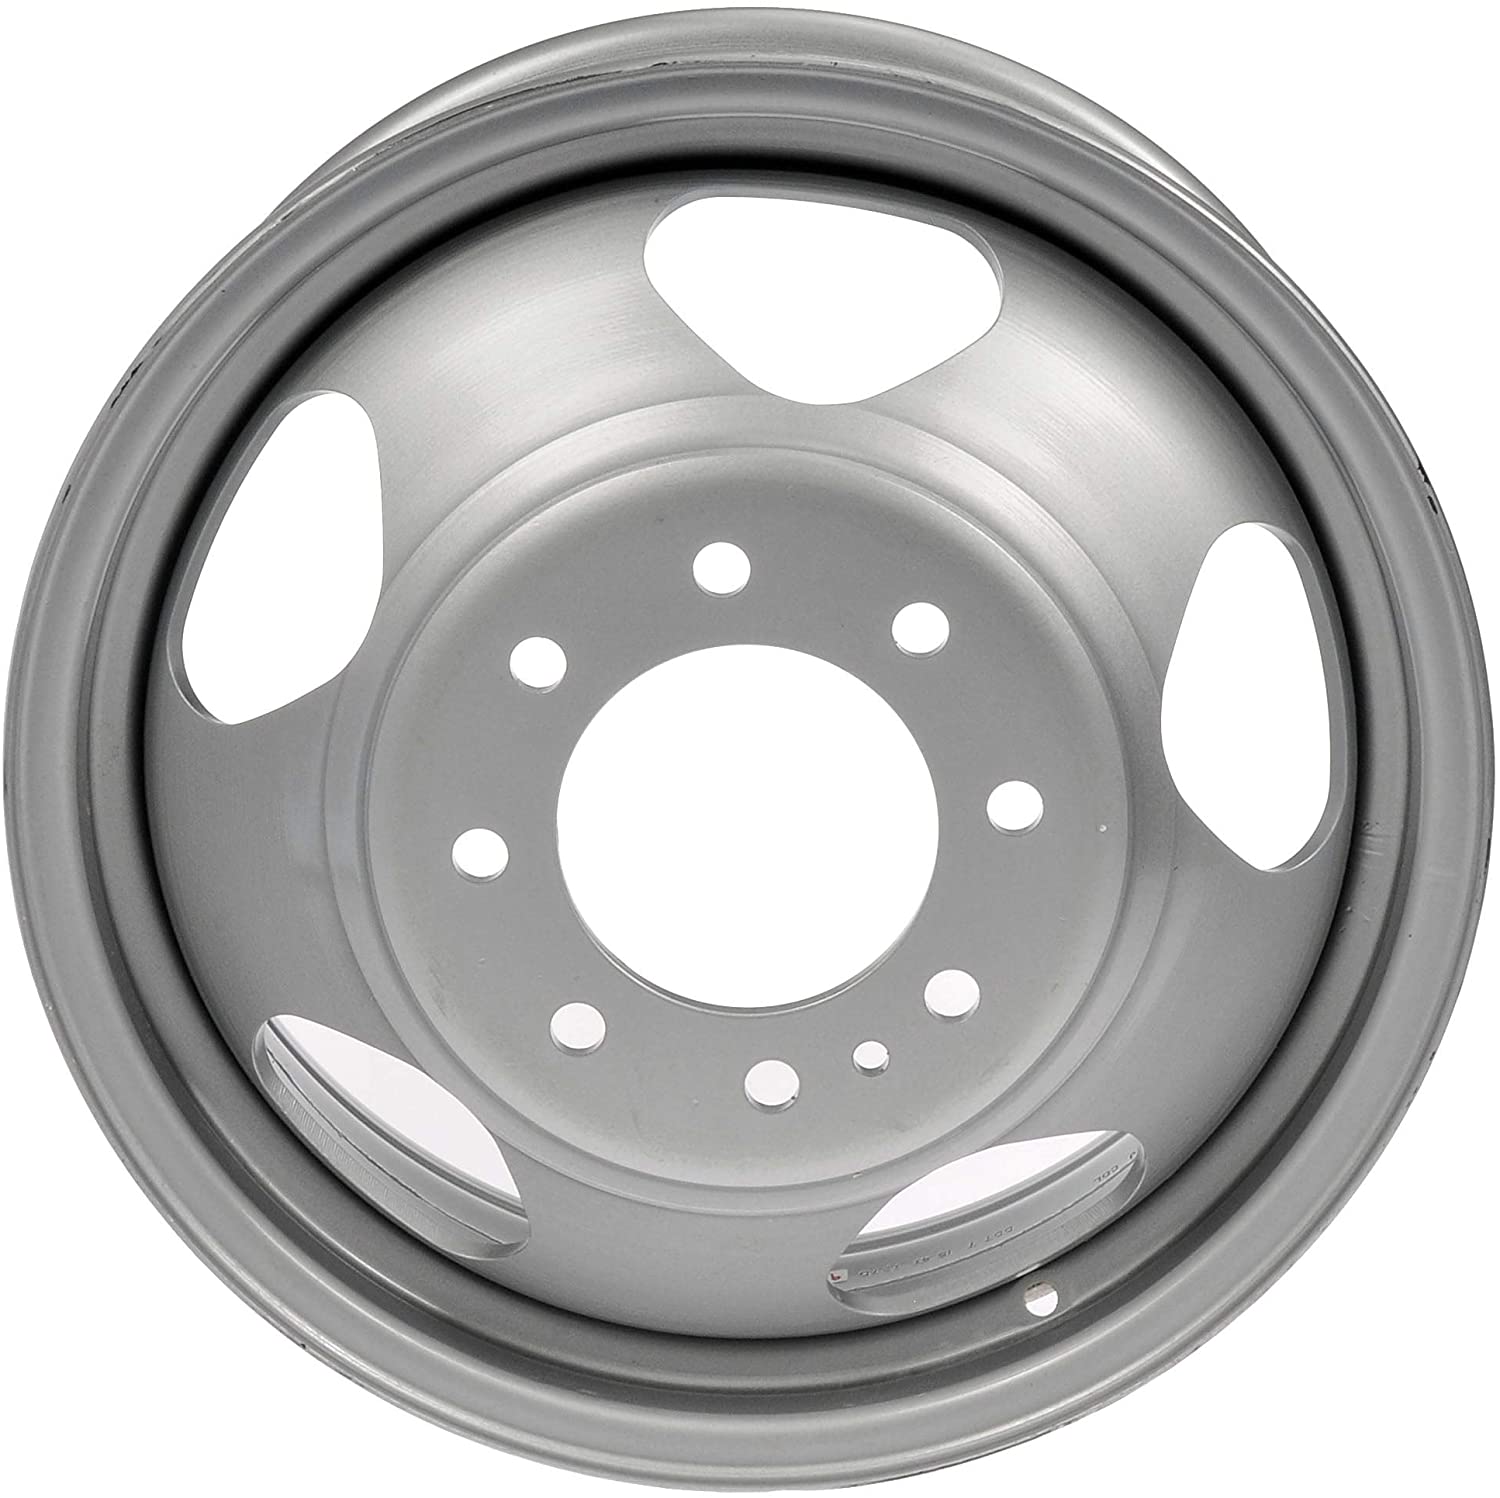 Dorman 939-236 Steel Wheel for Select Chevrolet/GMC Models (17x6.5